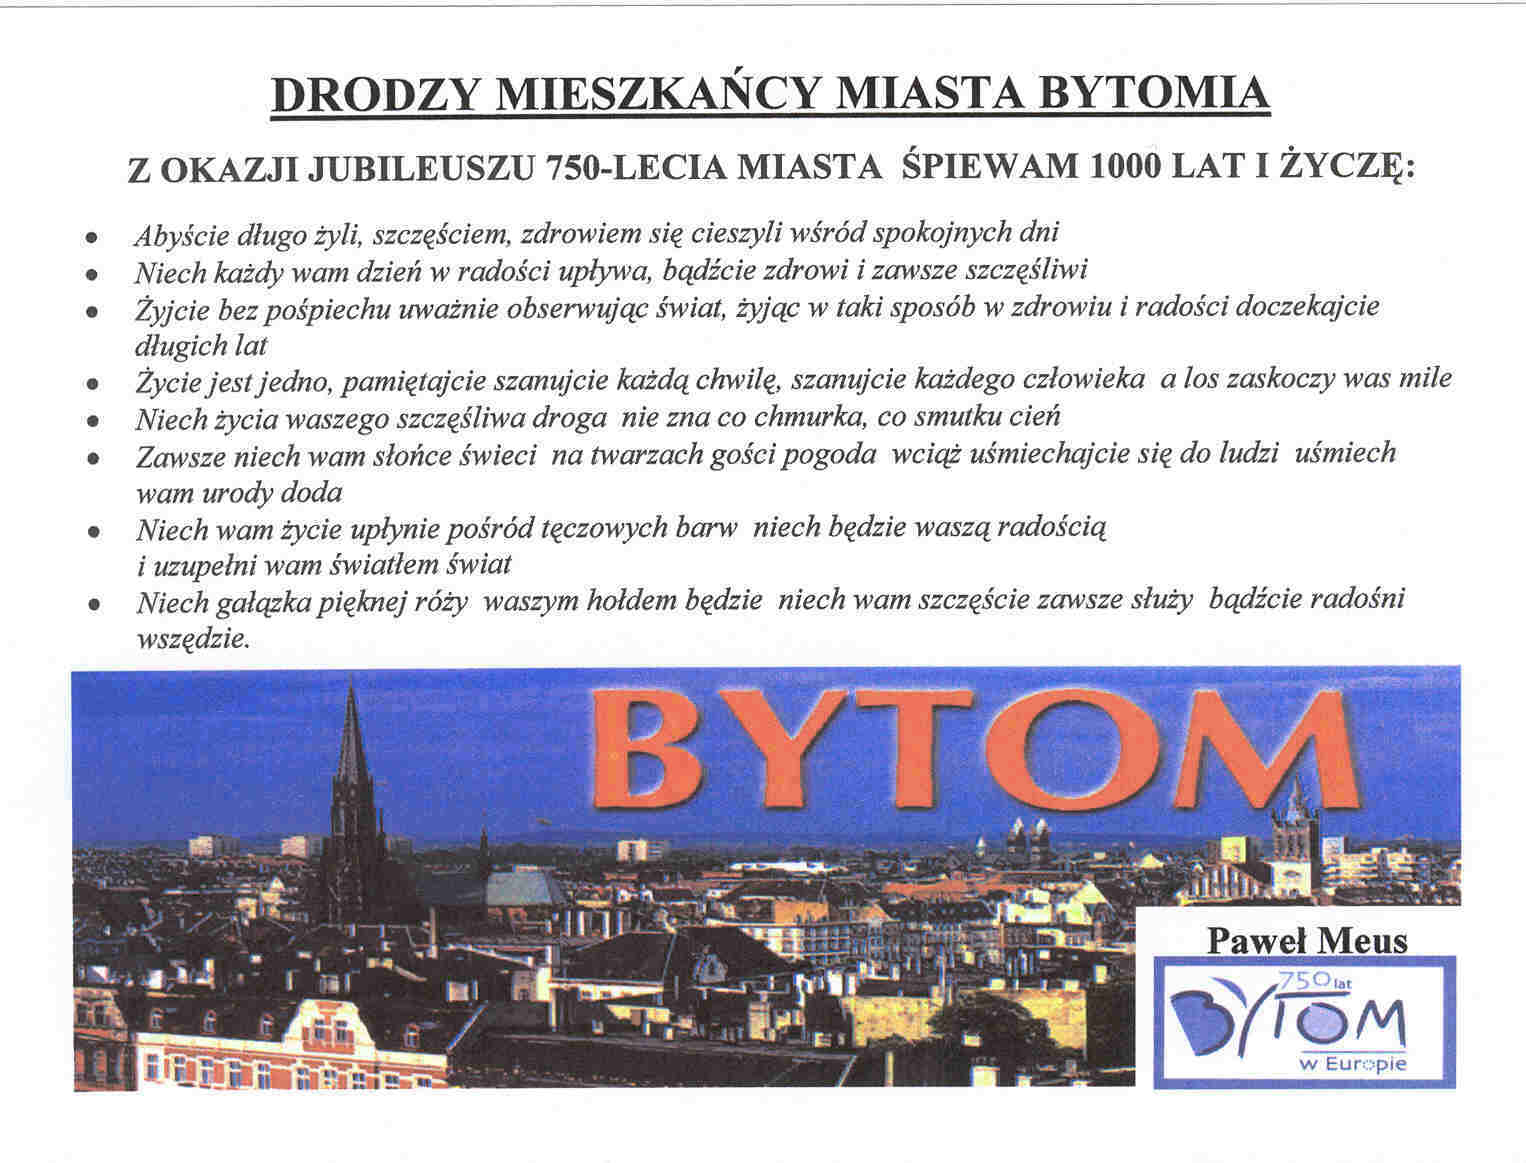 Poland-Bytom-hangout